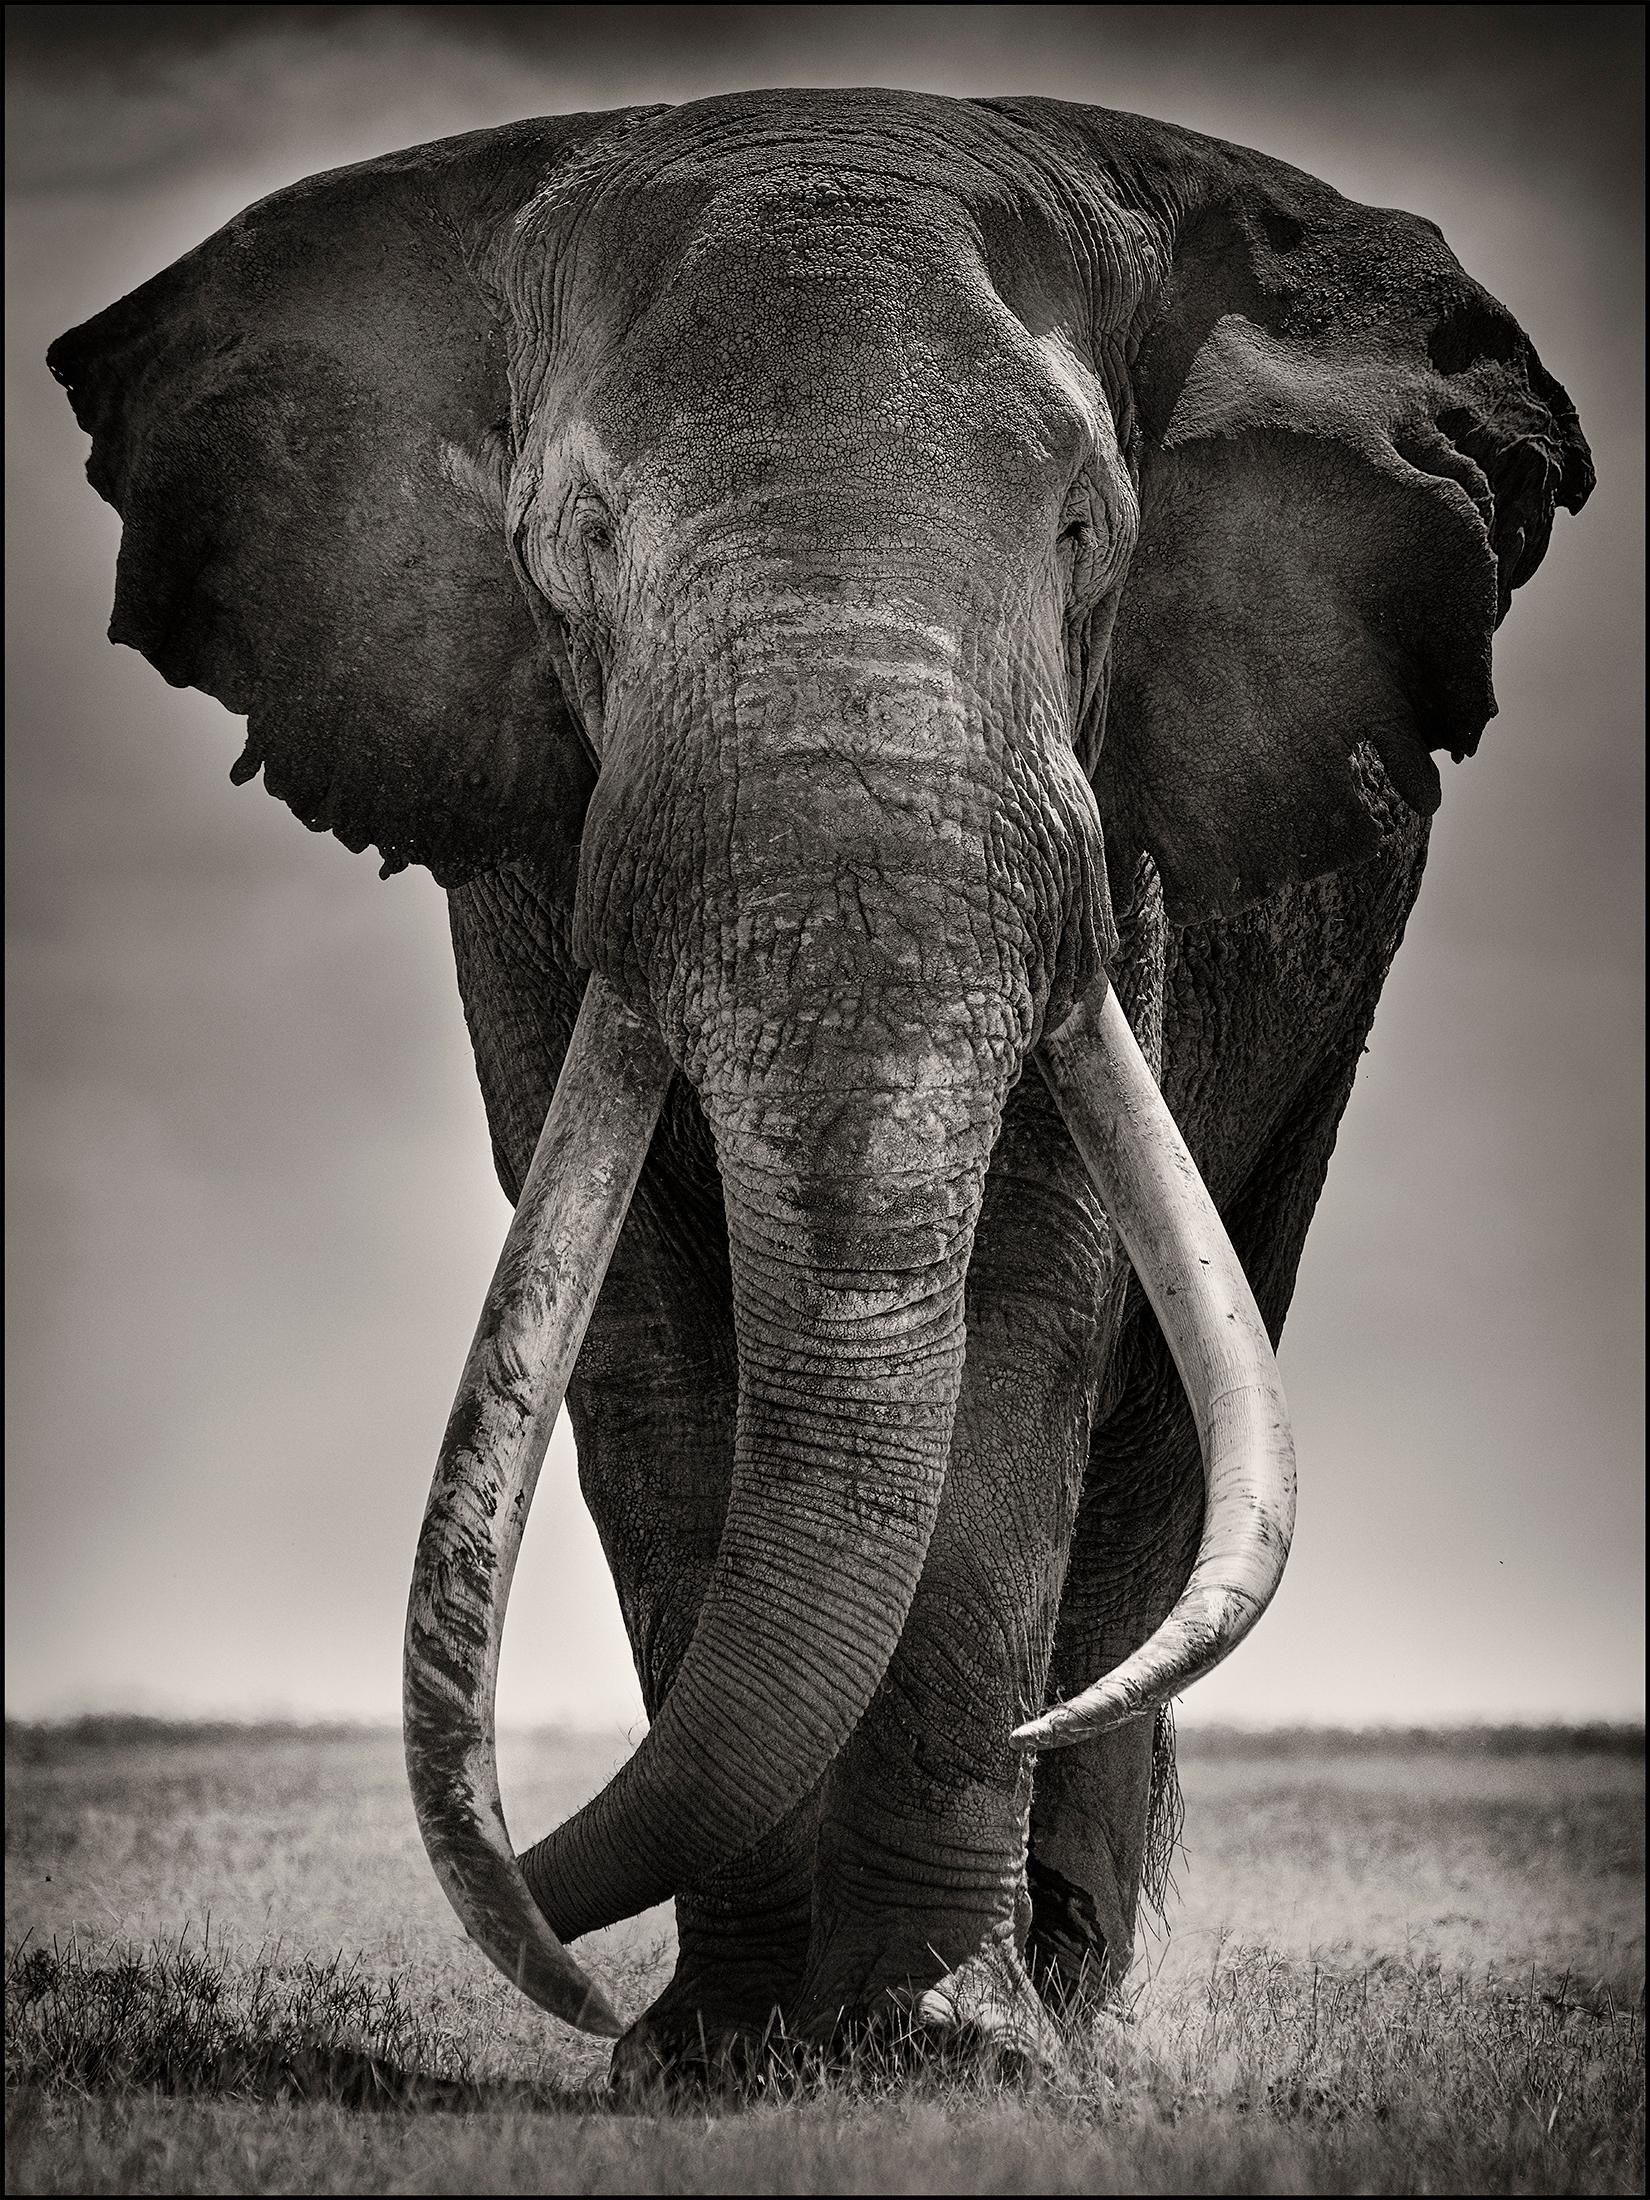 Joachim Schmeisser Portrait Photograph - Preserver of peace I, Kenya, Elephant, b&w photography